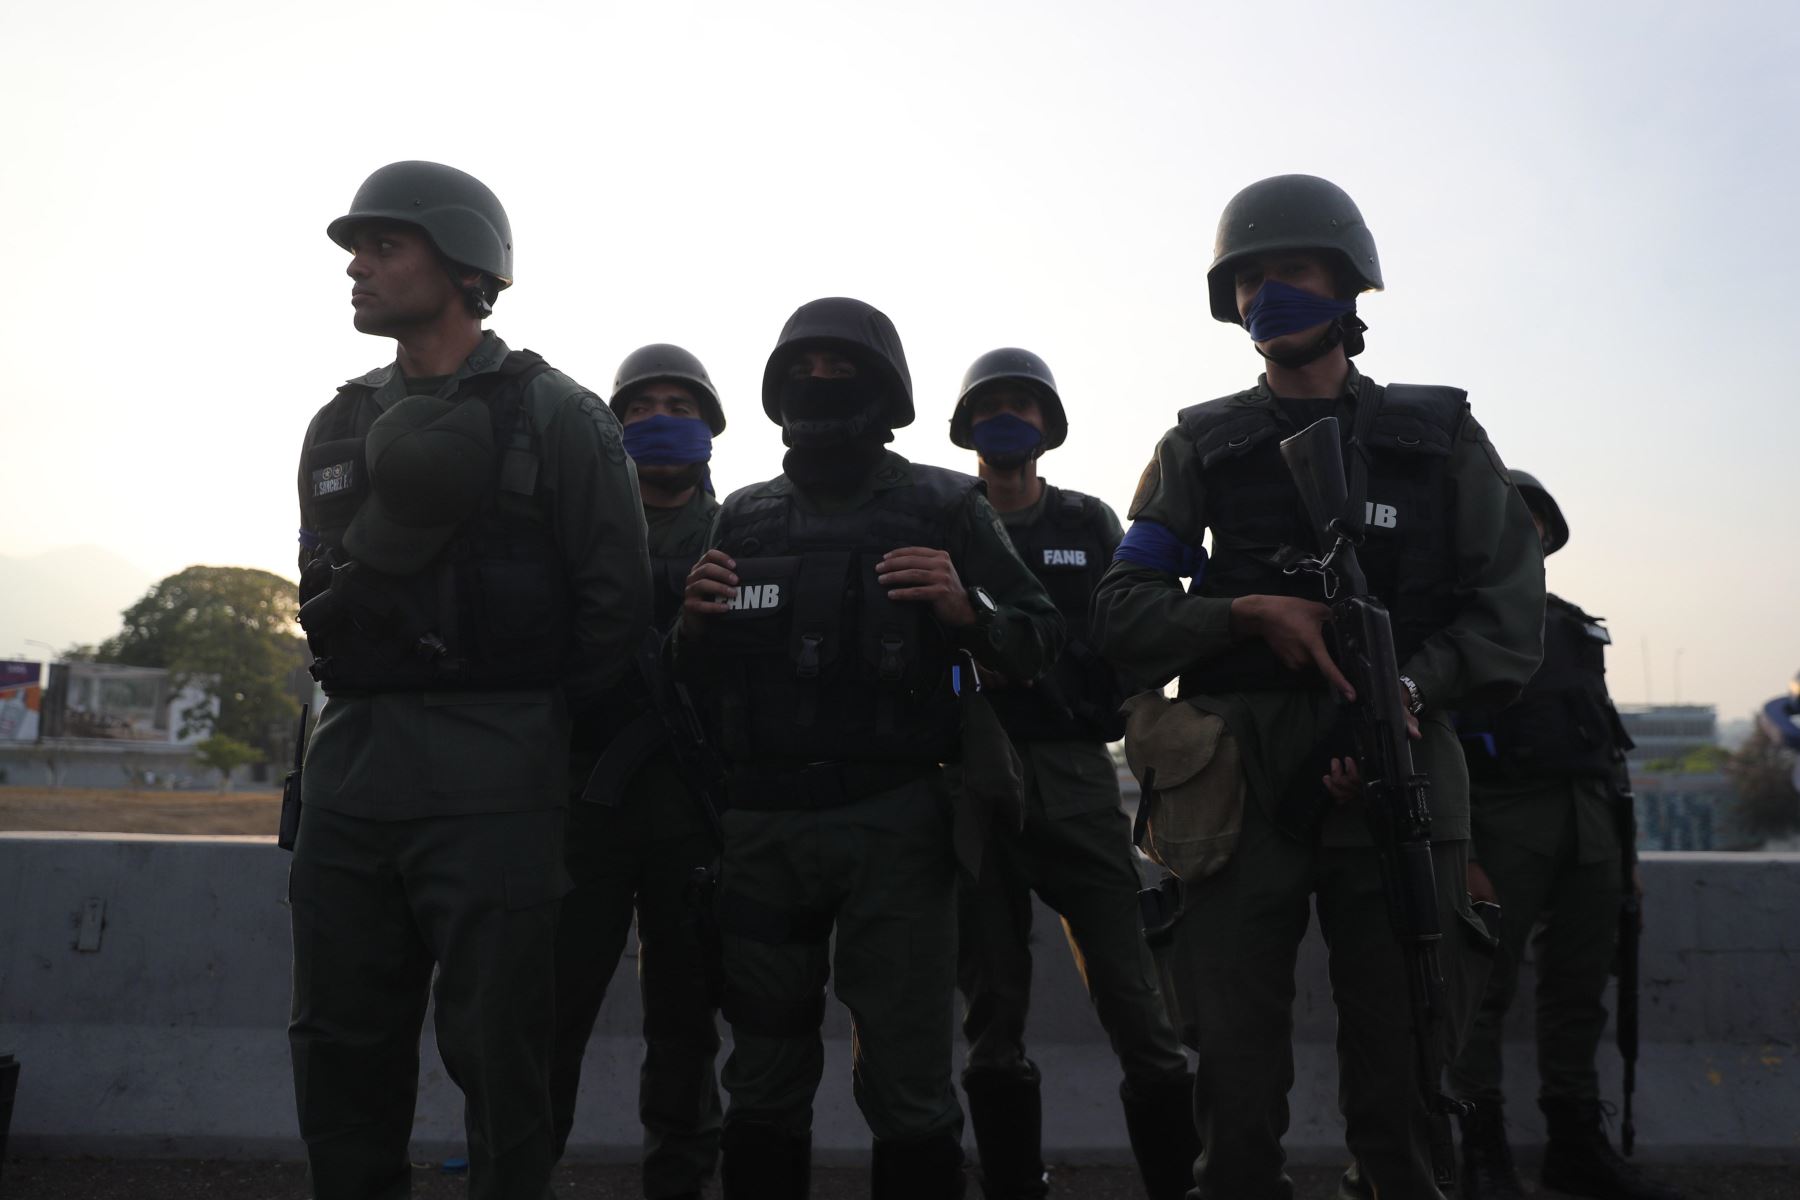 Una banda azul identifica a militares opositores a Maduro. Foto:EFE